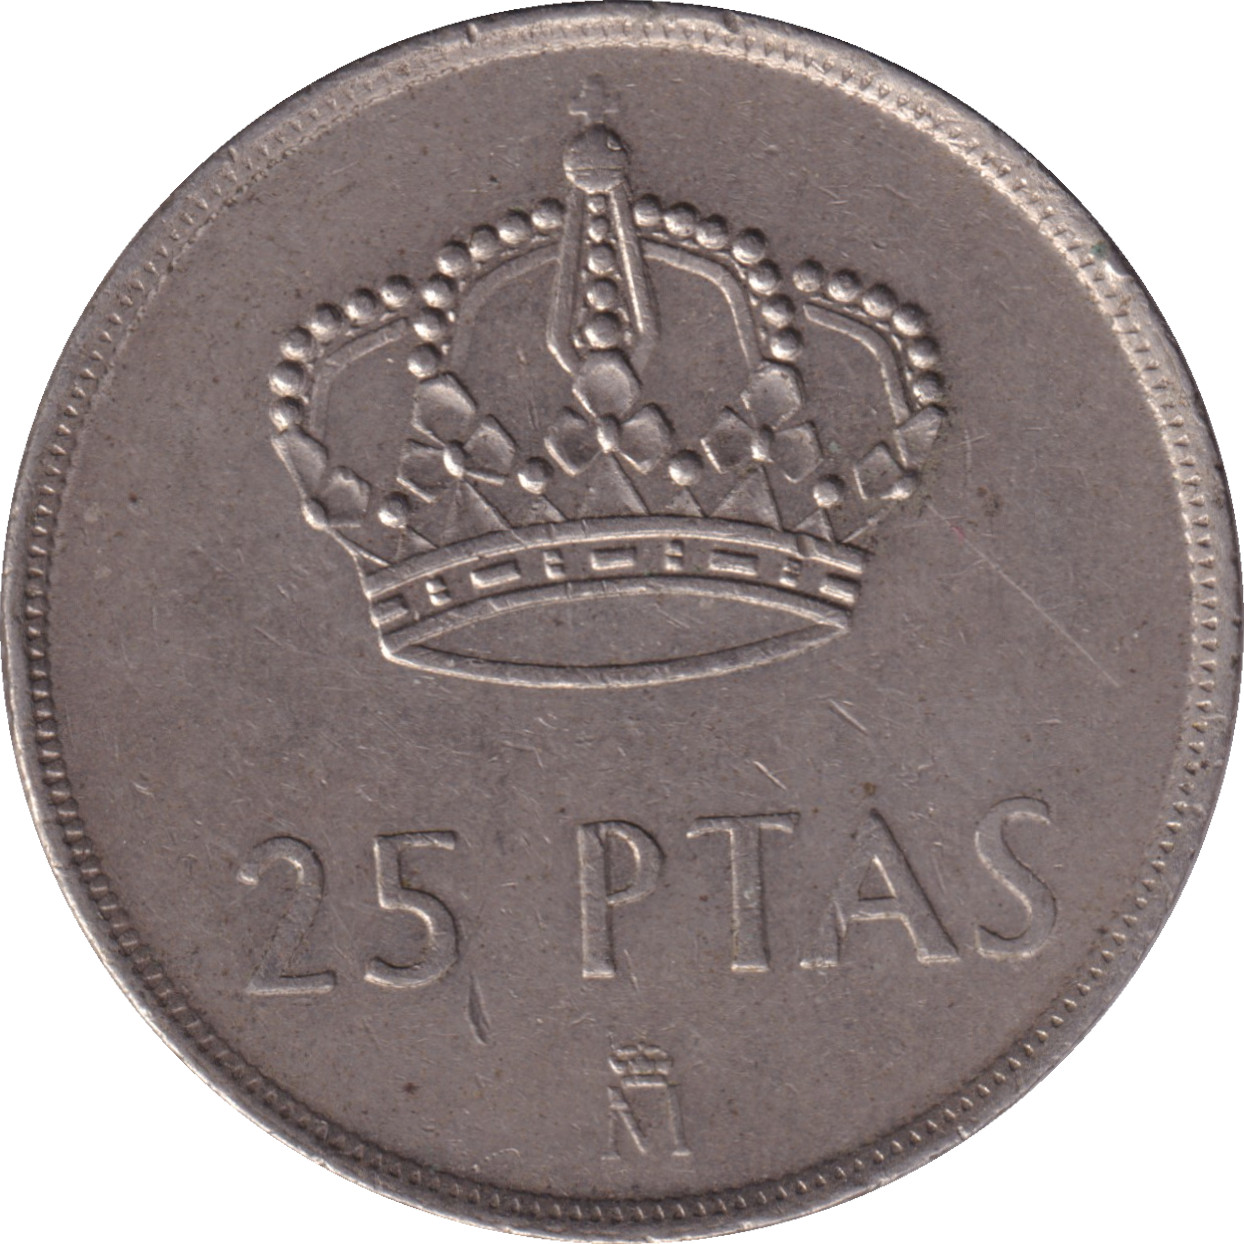 25 pesetas - Juan Carlos I - Couronne - Type 2